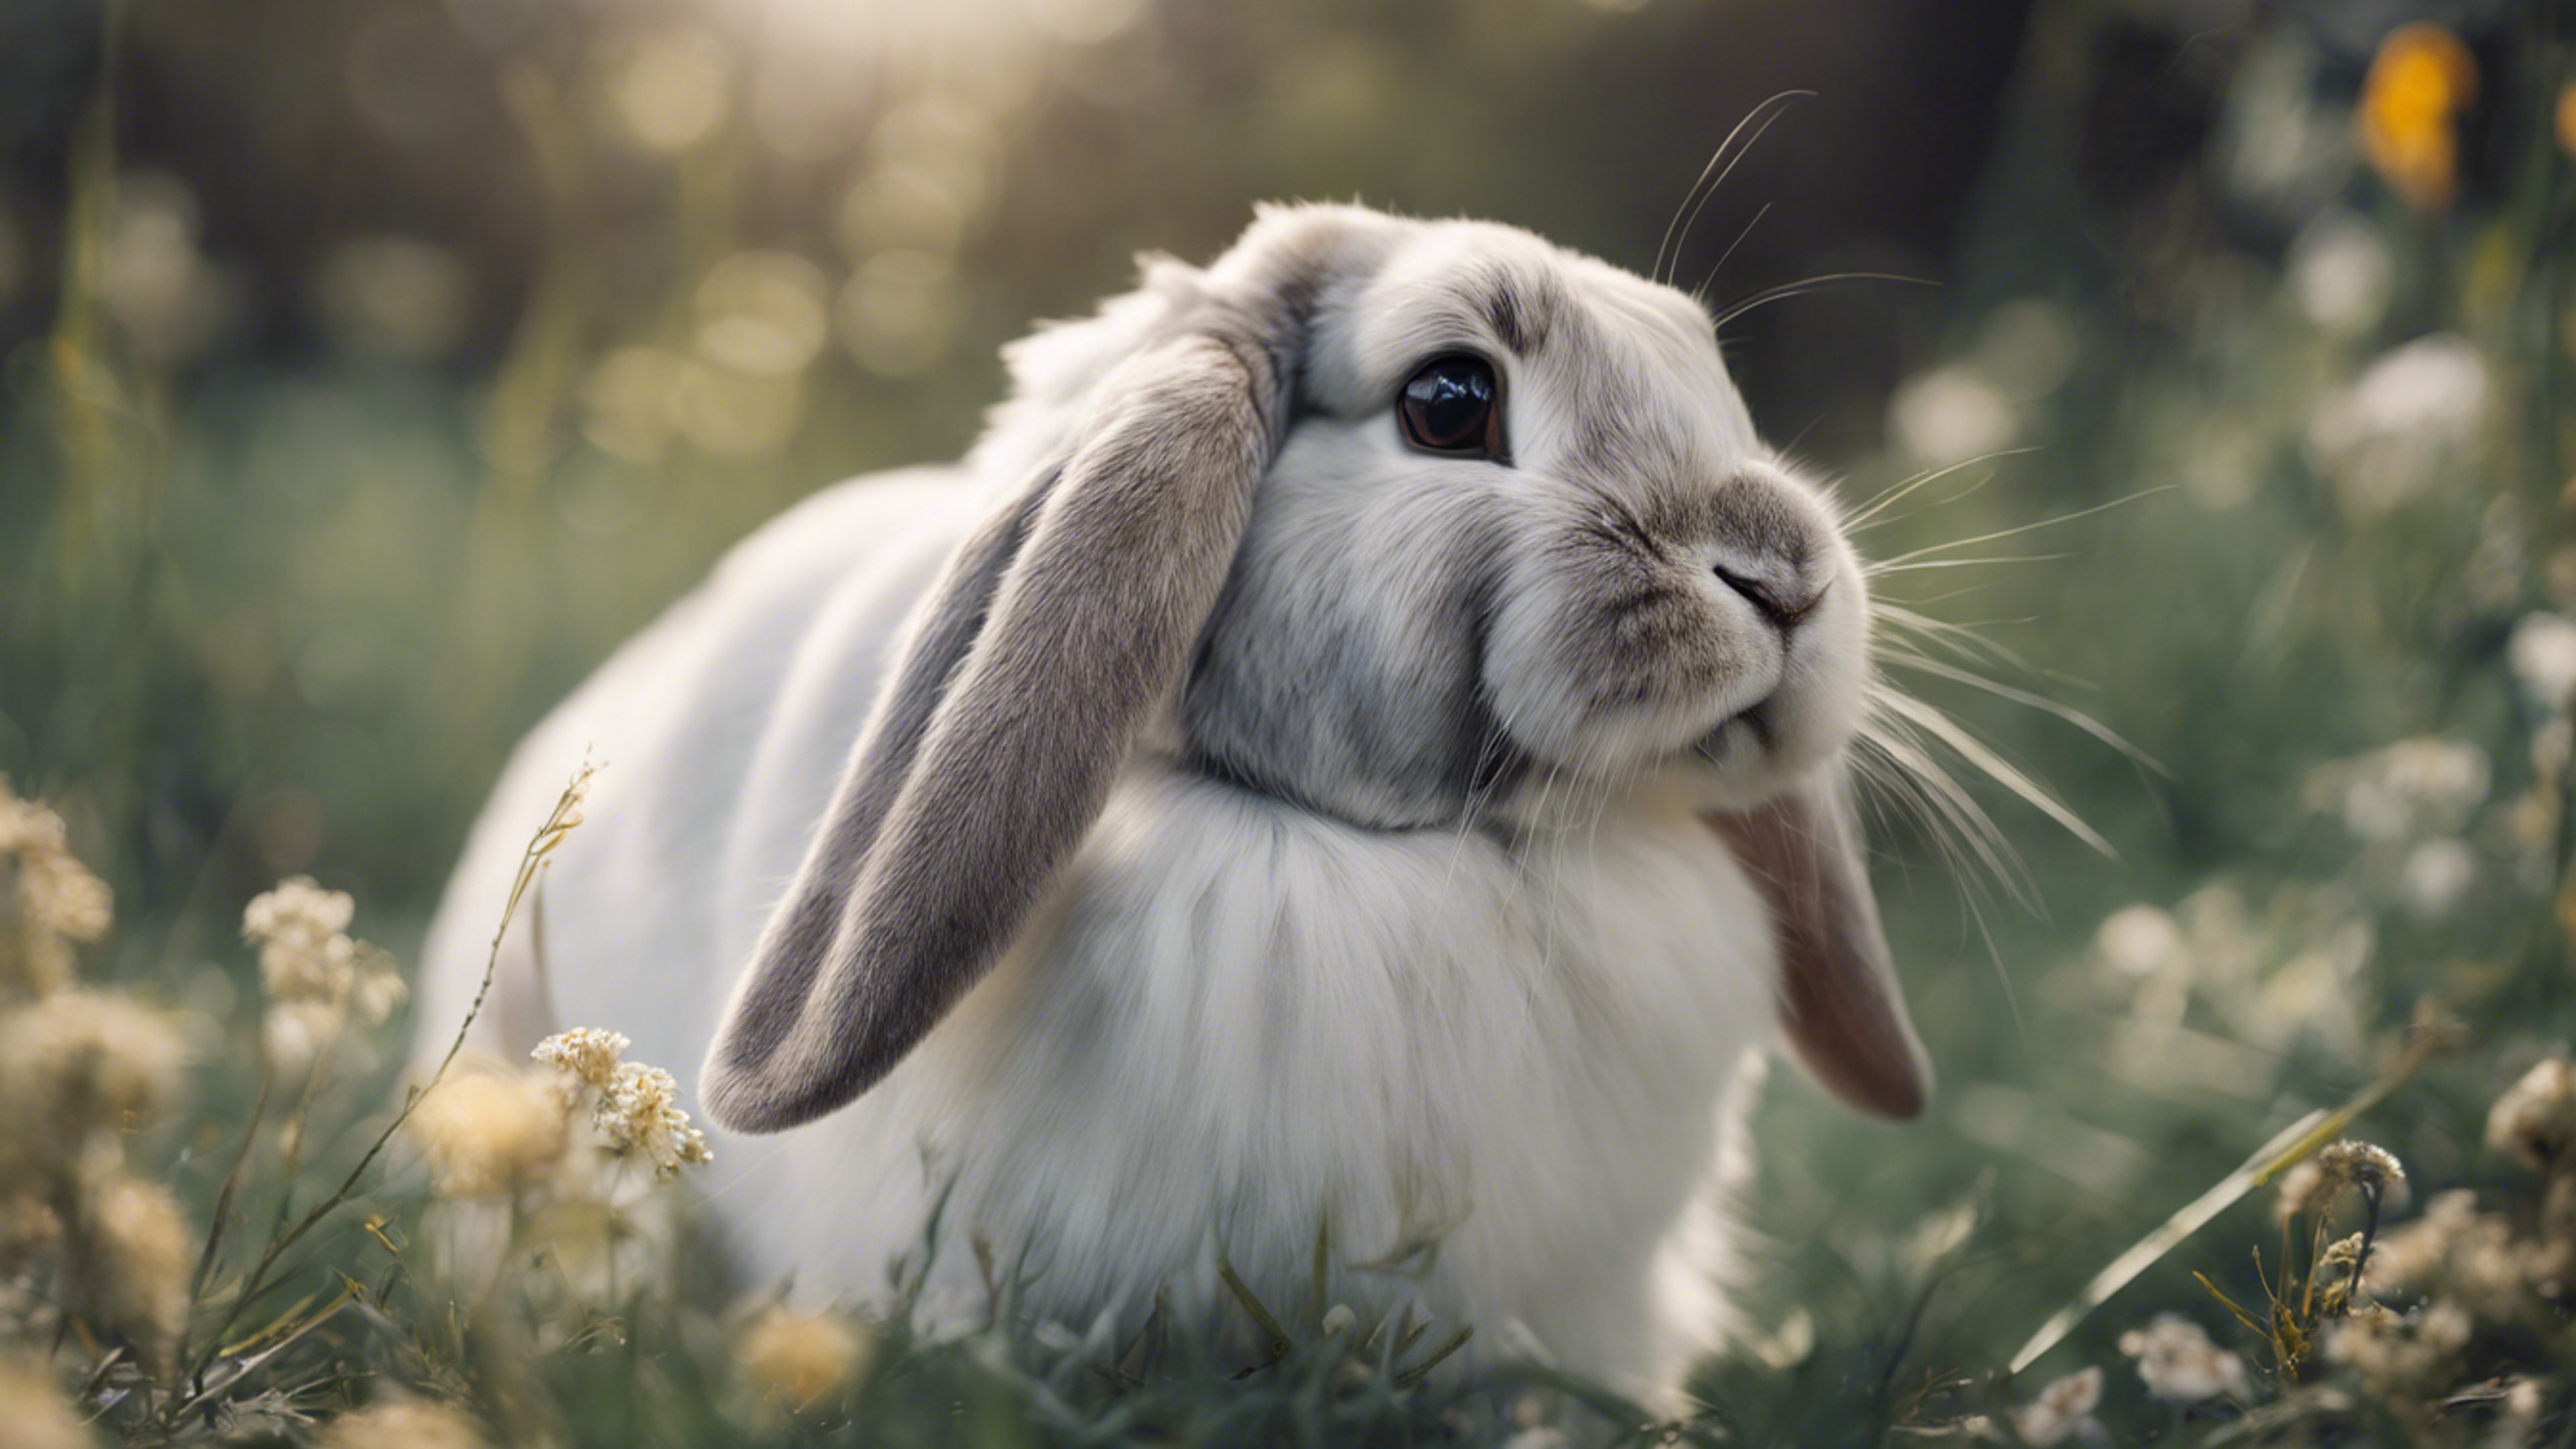 A portrait of a regal lop-eared rabbit with a shining silver coat.壁紙[43184d22ad35468da6a8]